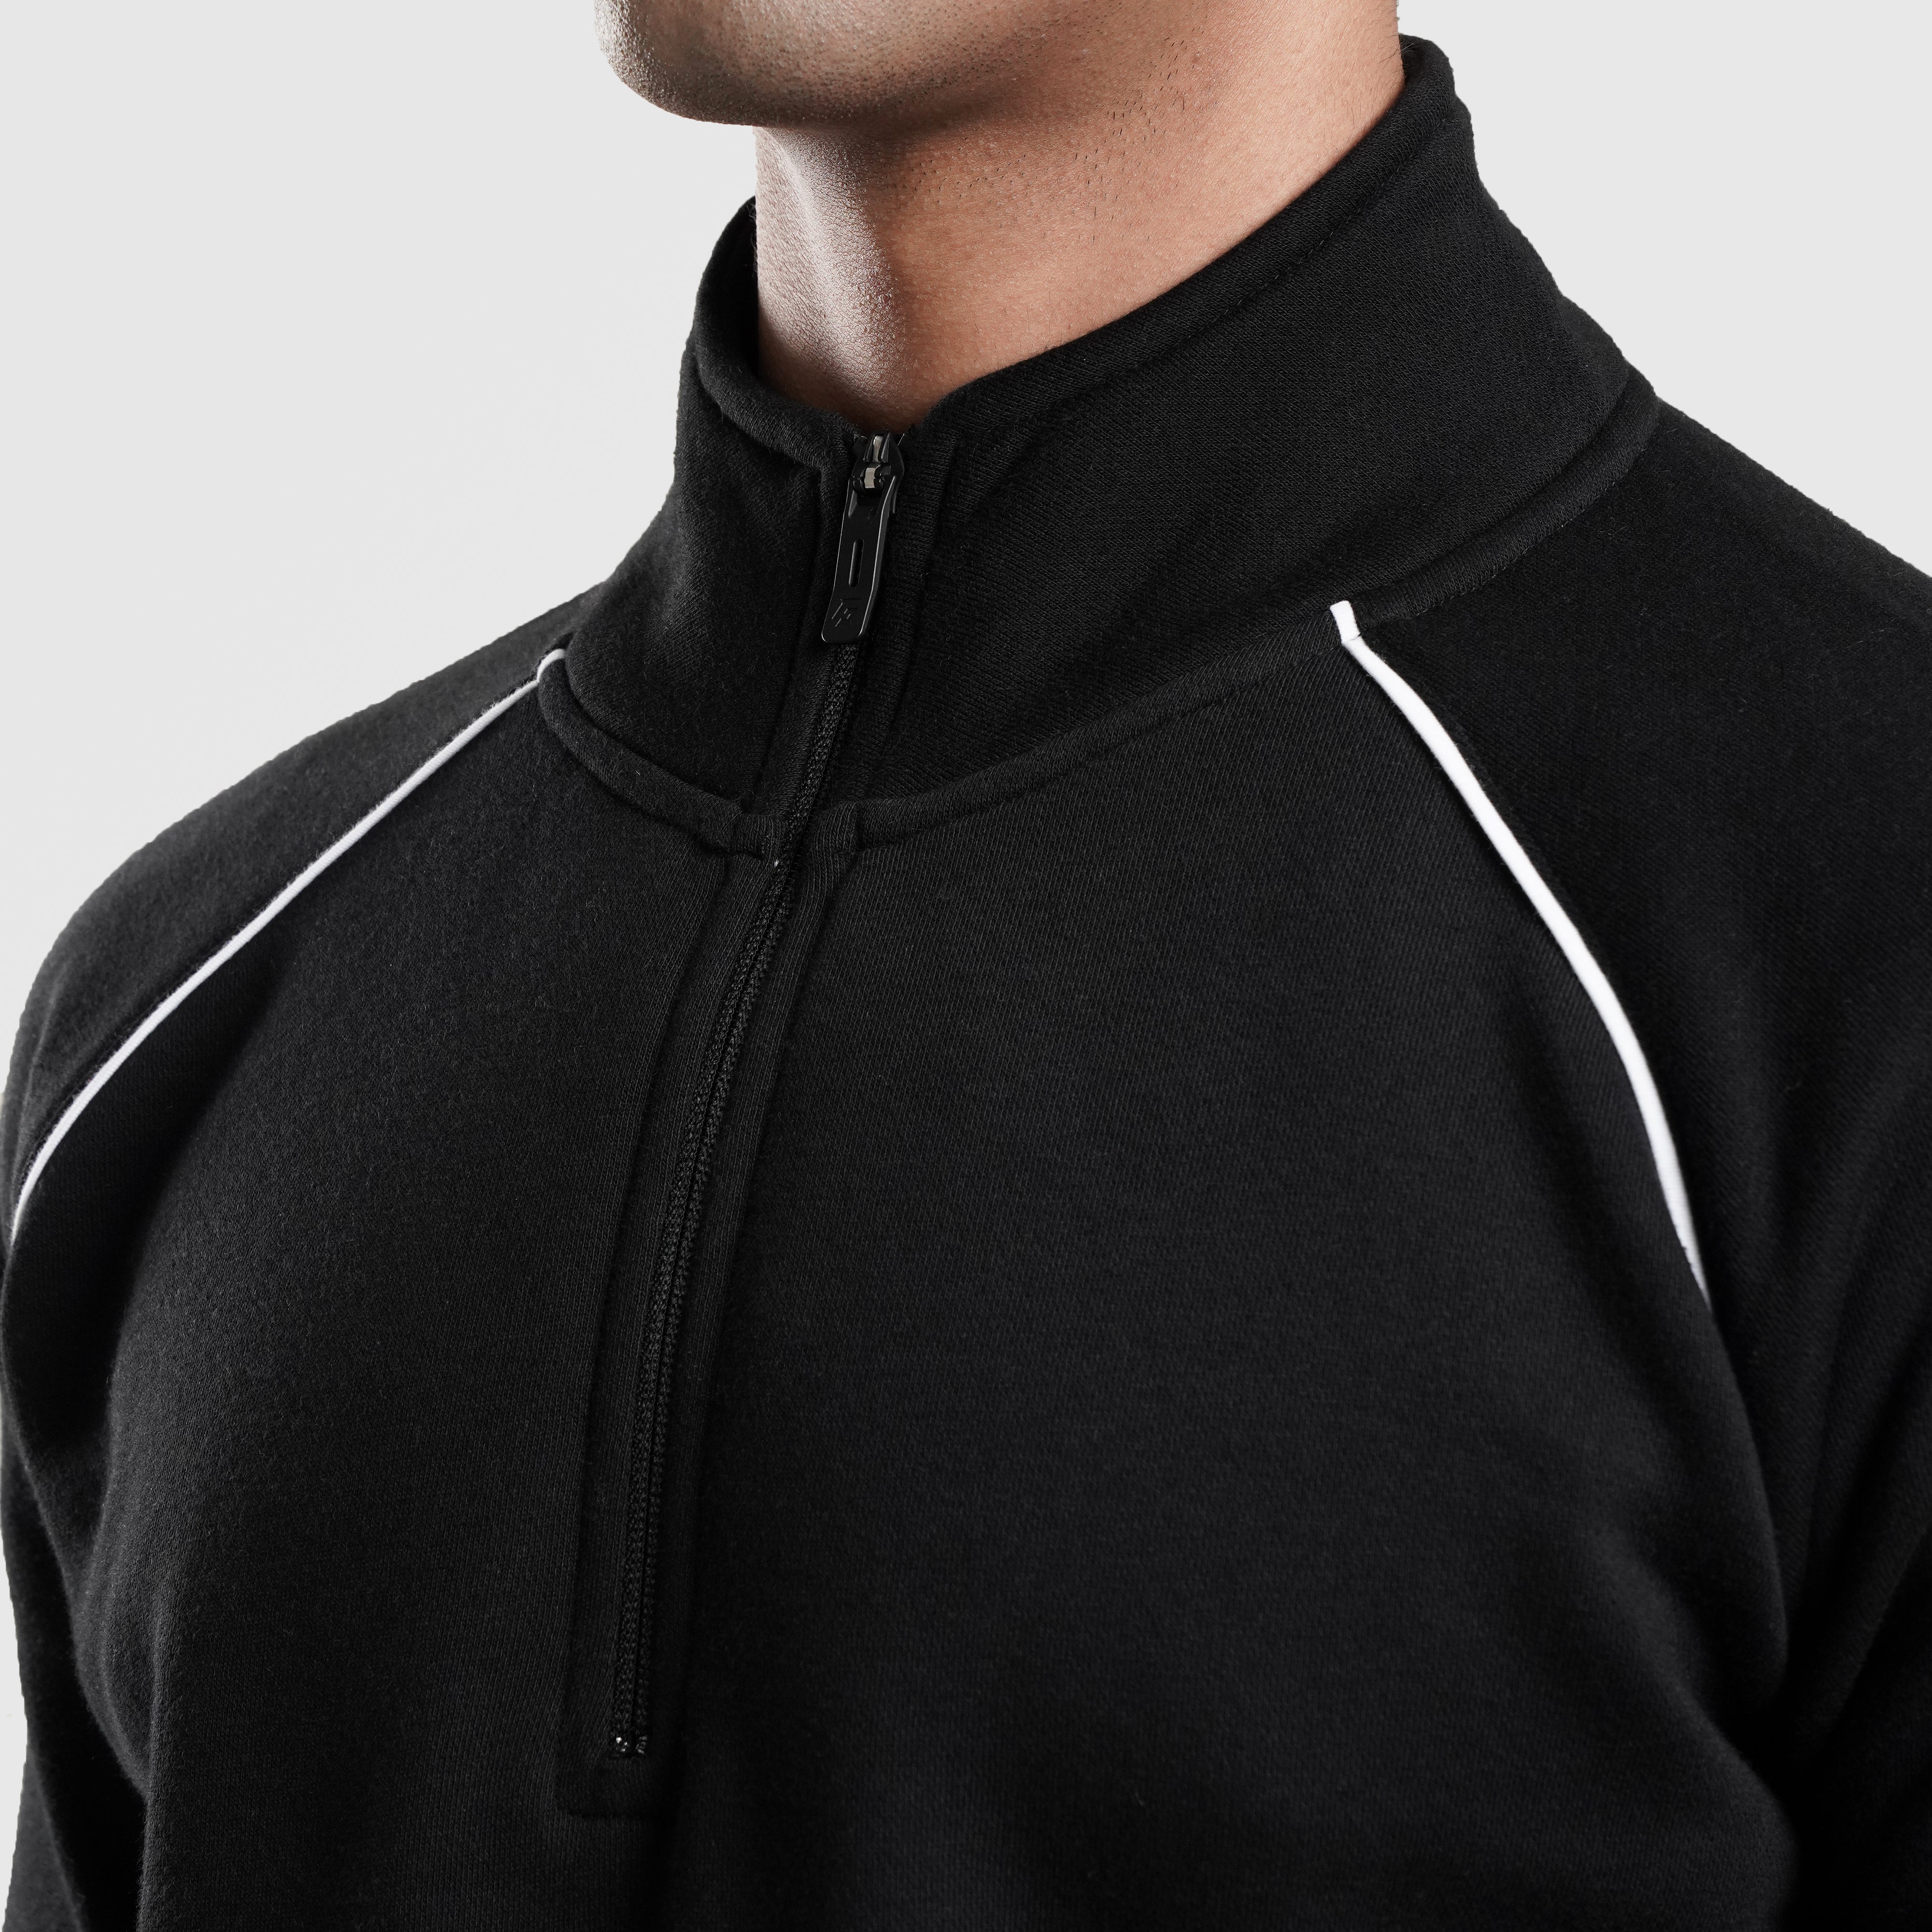 Range Sweatshirt (Black)